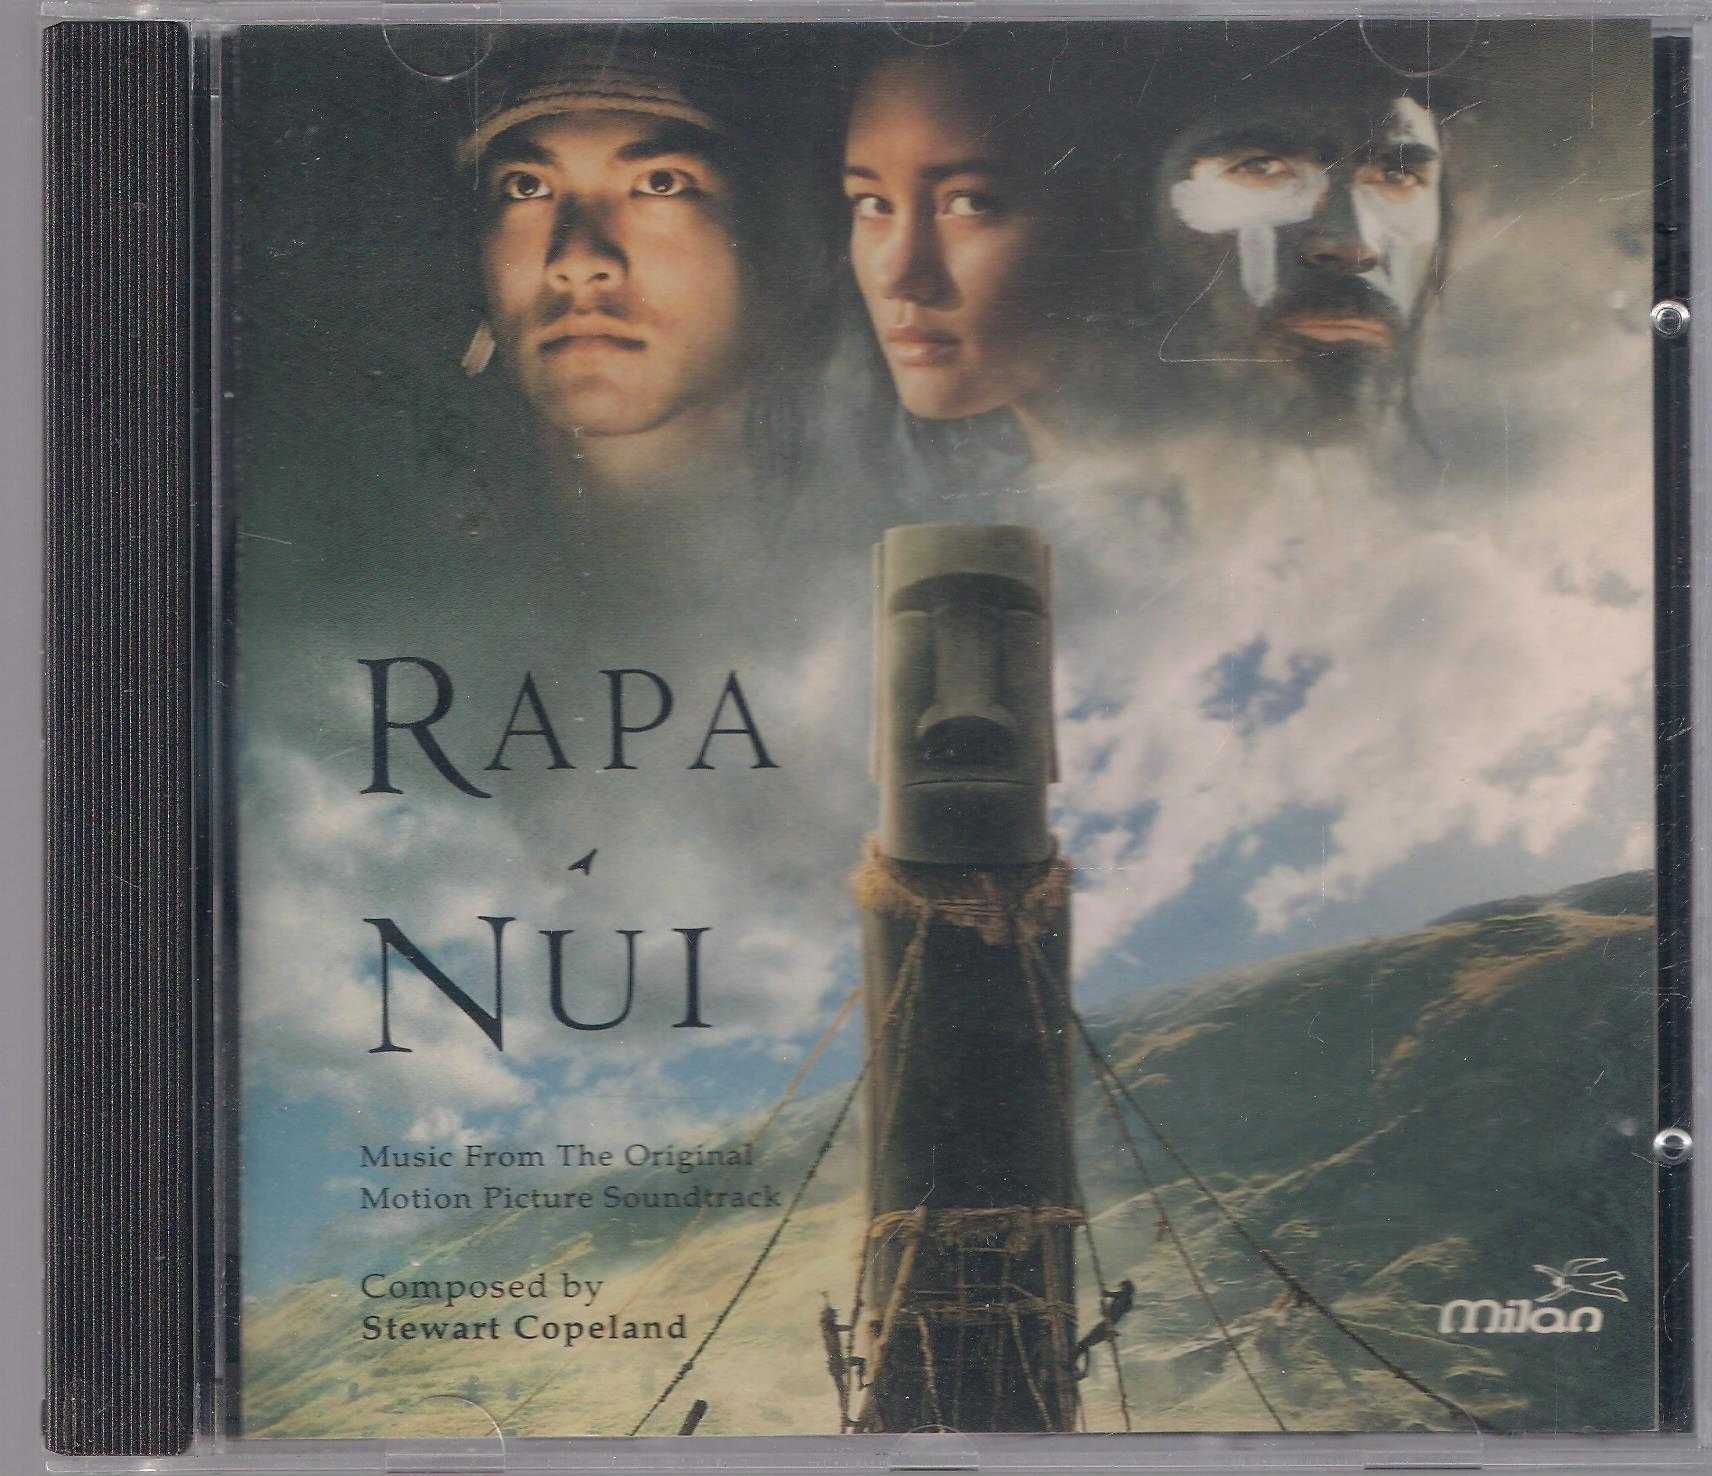 Stewart Copeland The Police - Rapa Nui CD Soundtrack OST